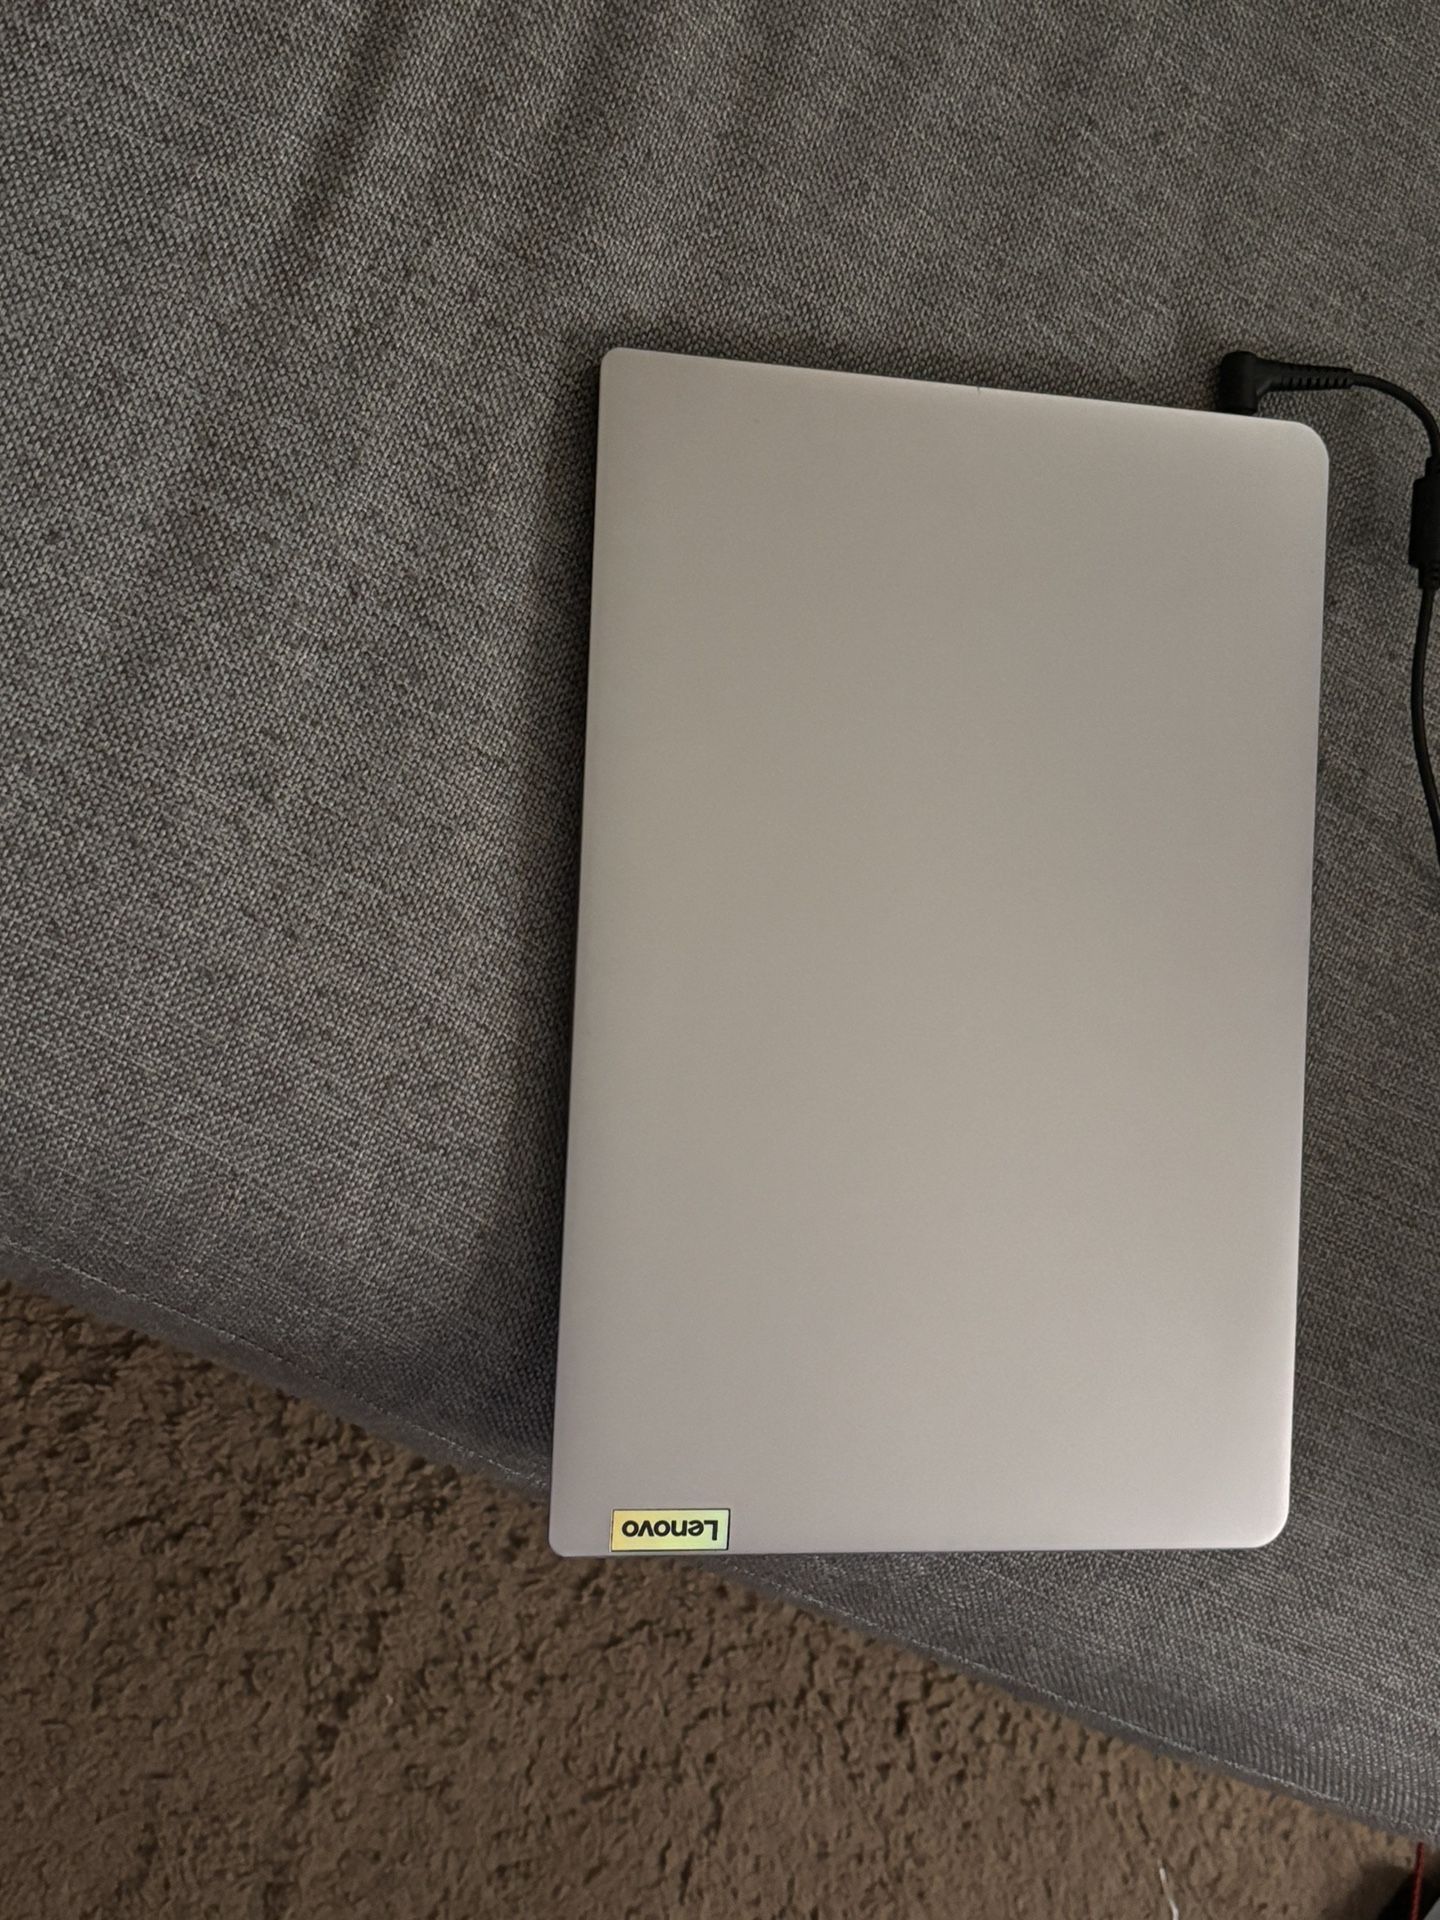 Lenovo IdeaPad Laptop with Computer Bag